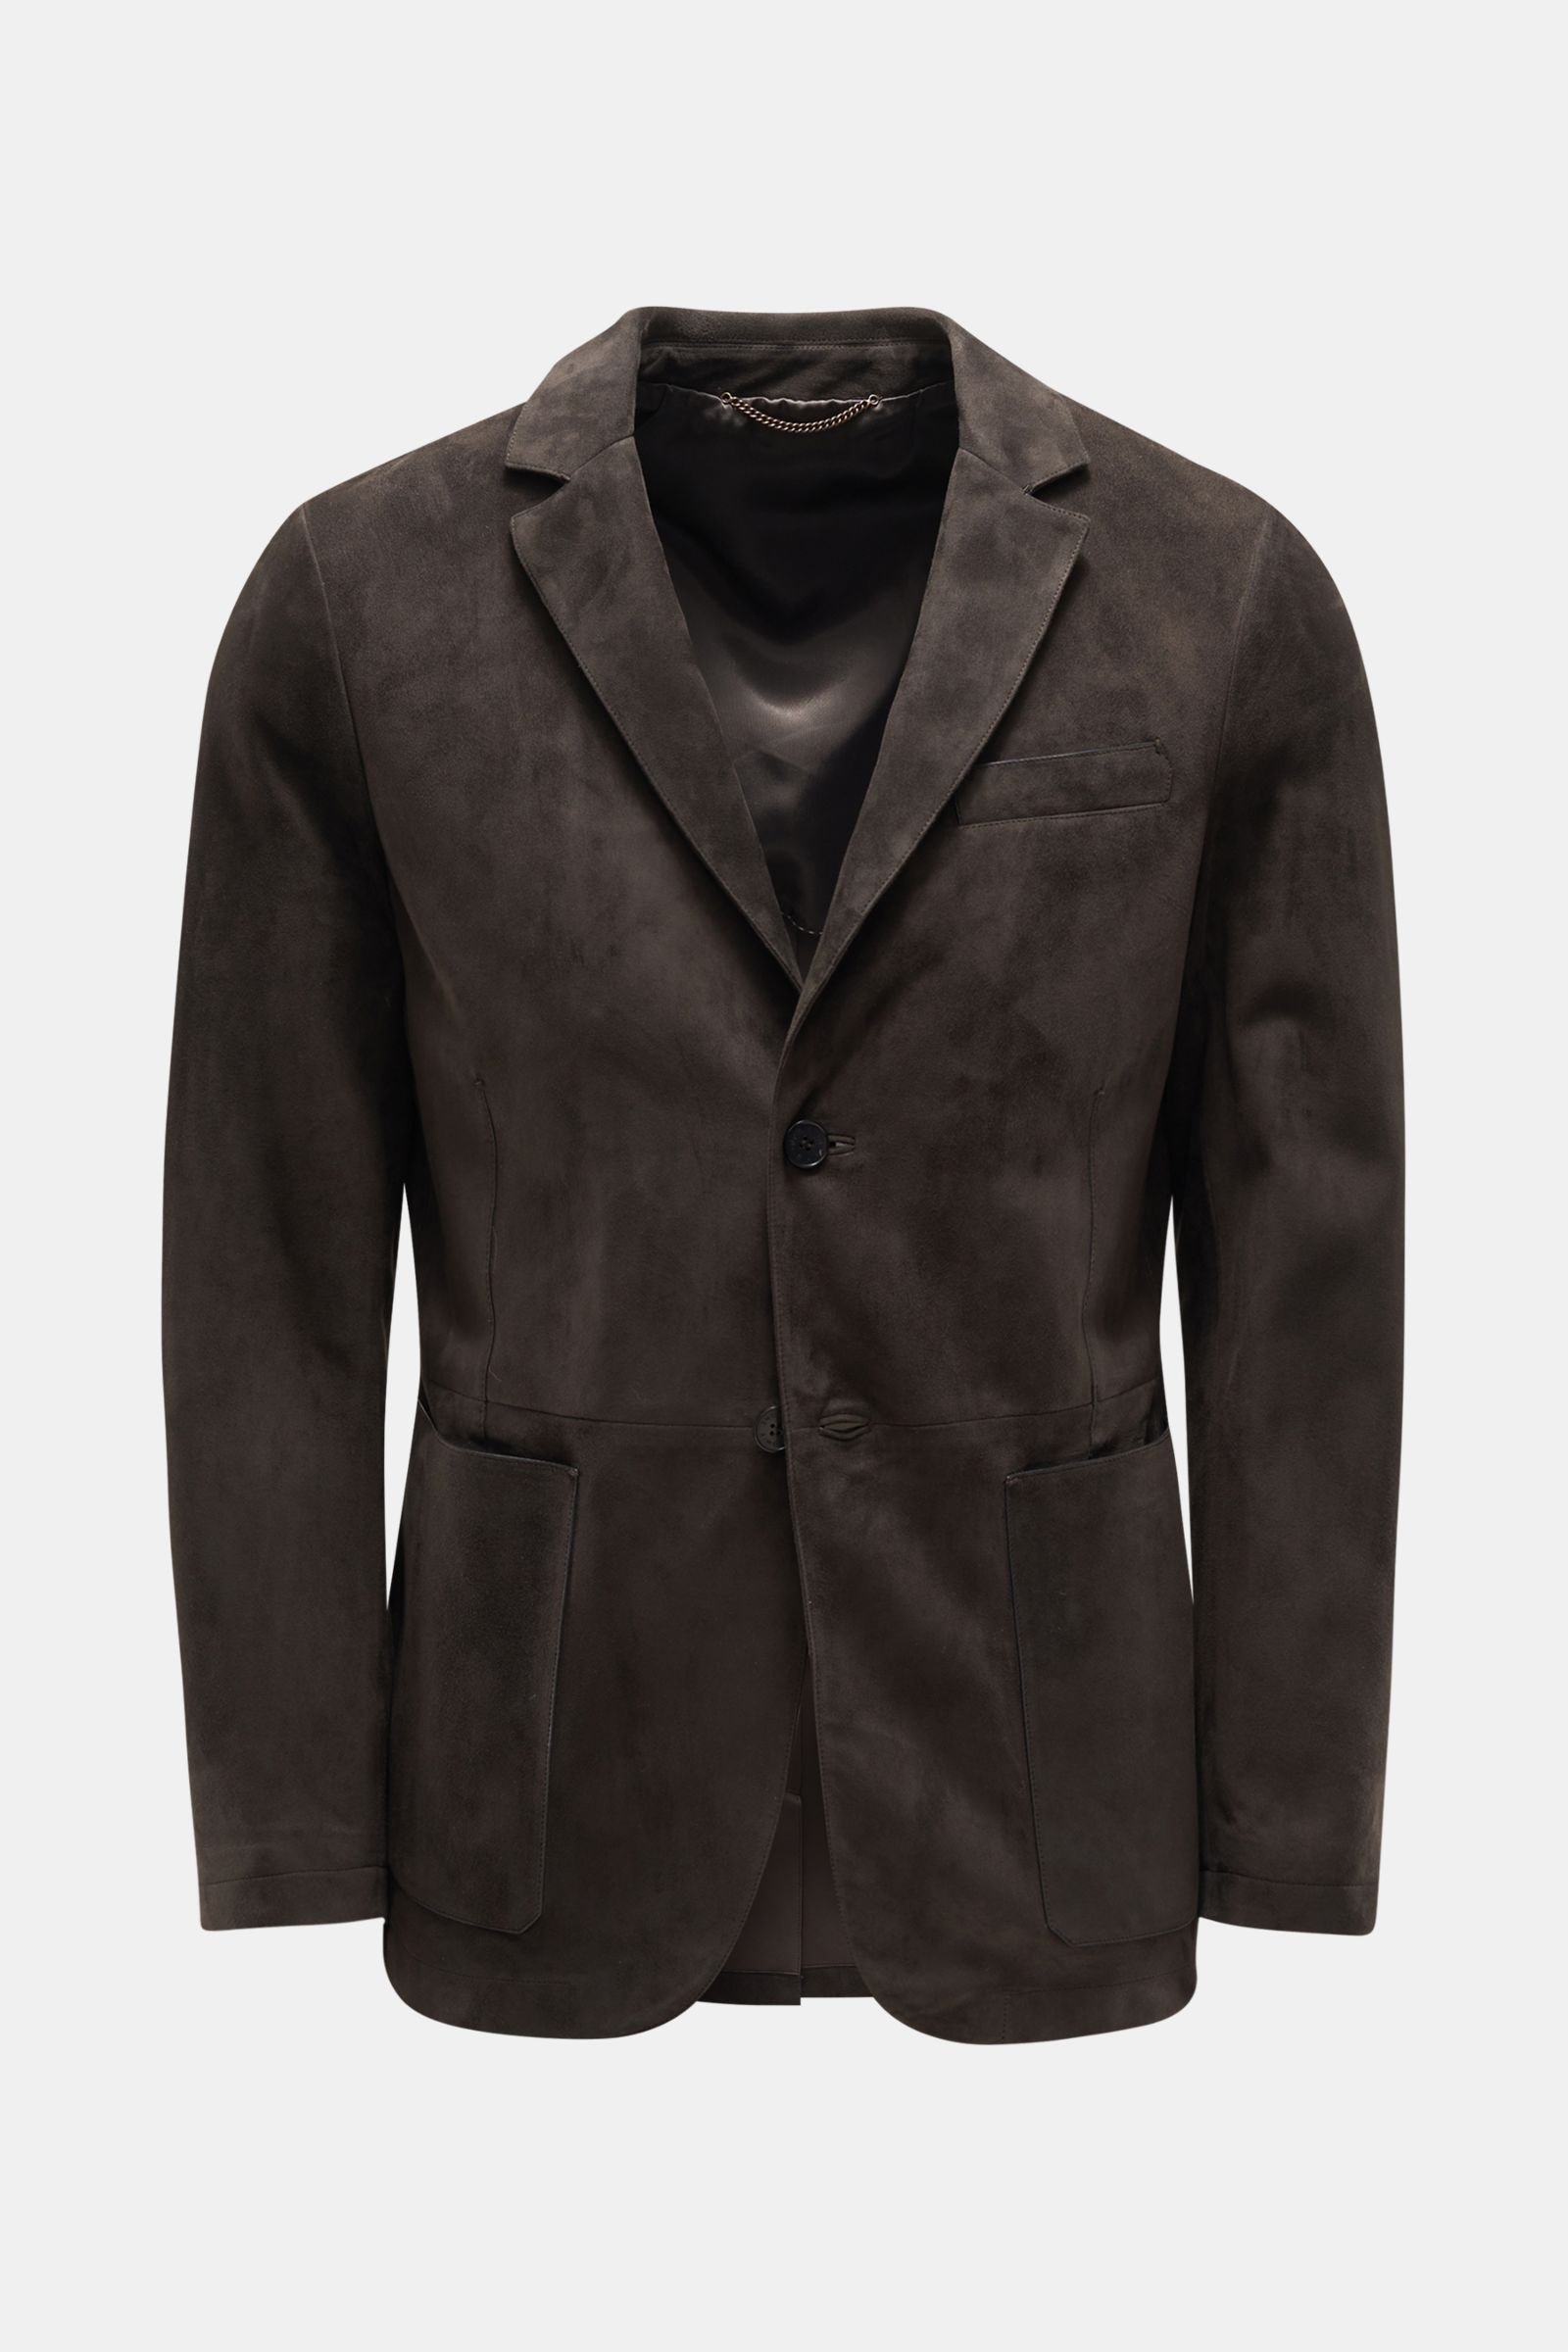 Suede jacket dark brown